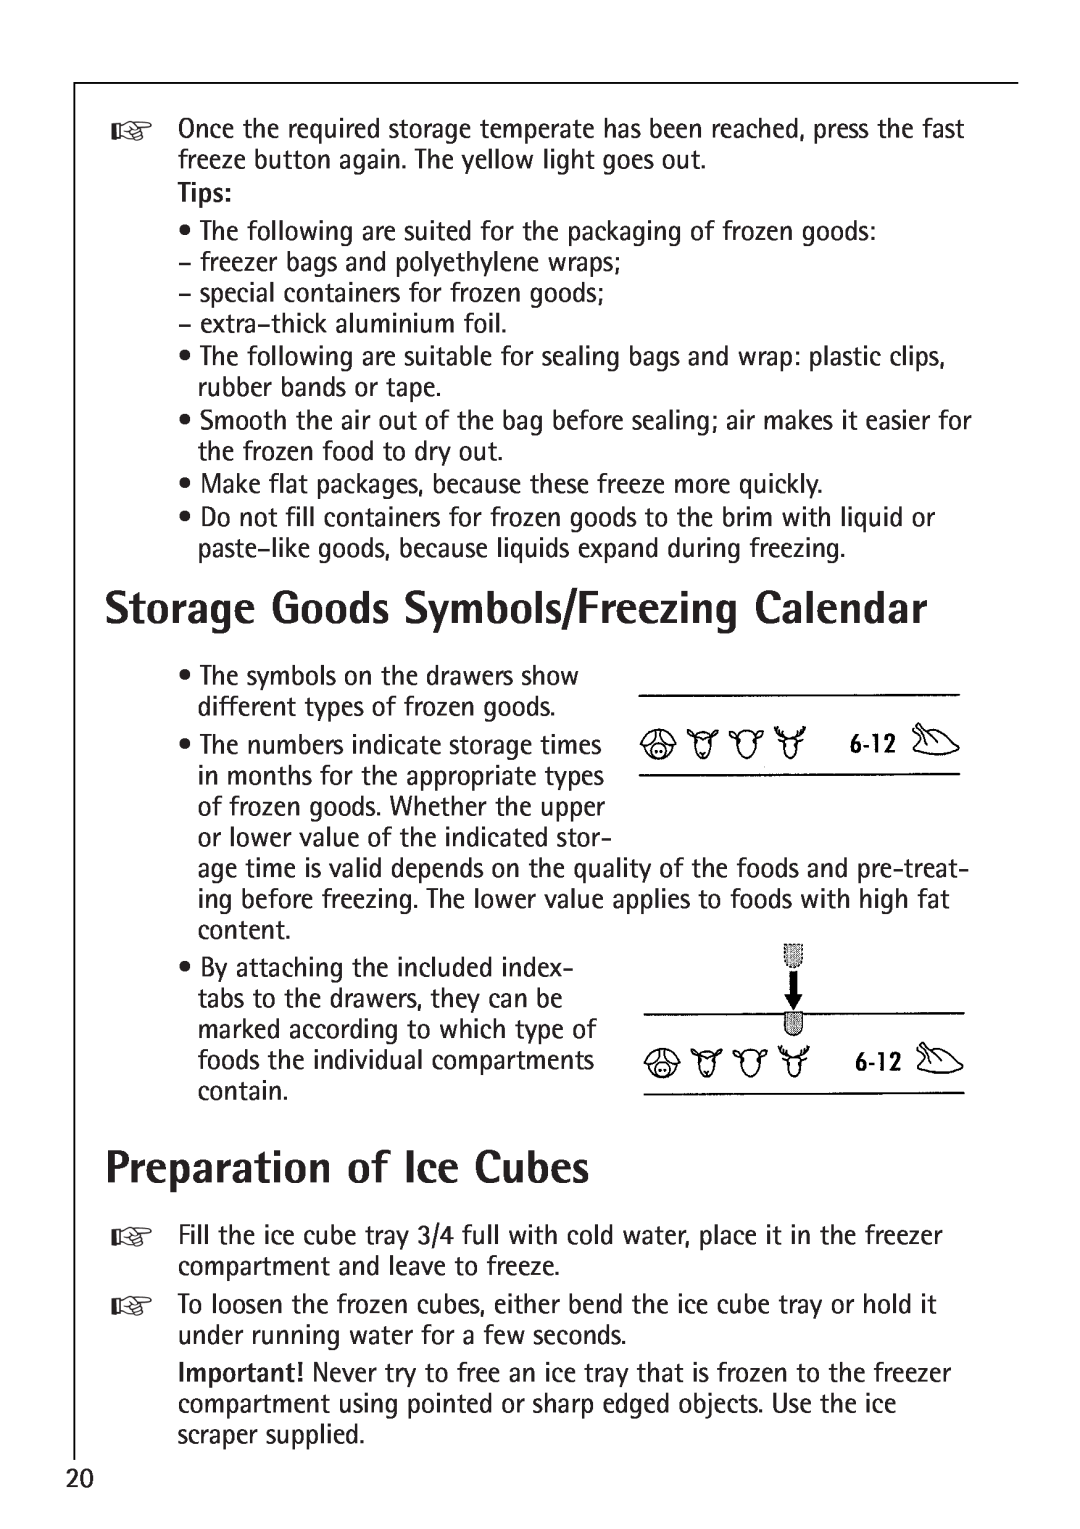 Electrolux 1254-6 iU installation instructions Storage Goods Symbols/Freezing Calendar, Preparation of Ice Cubes, Tips 